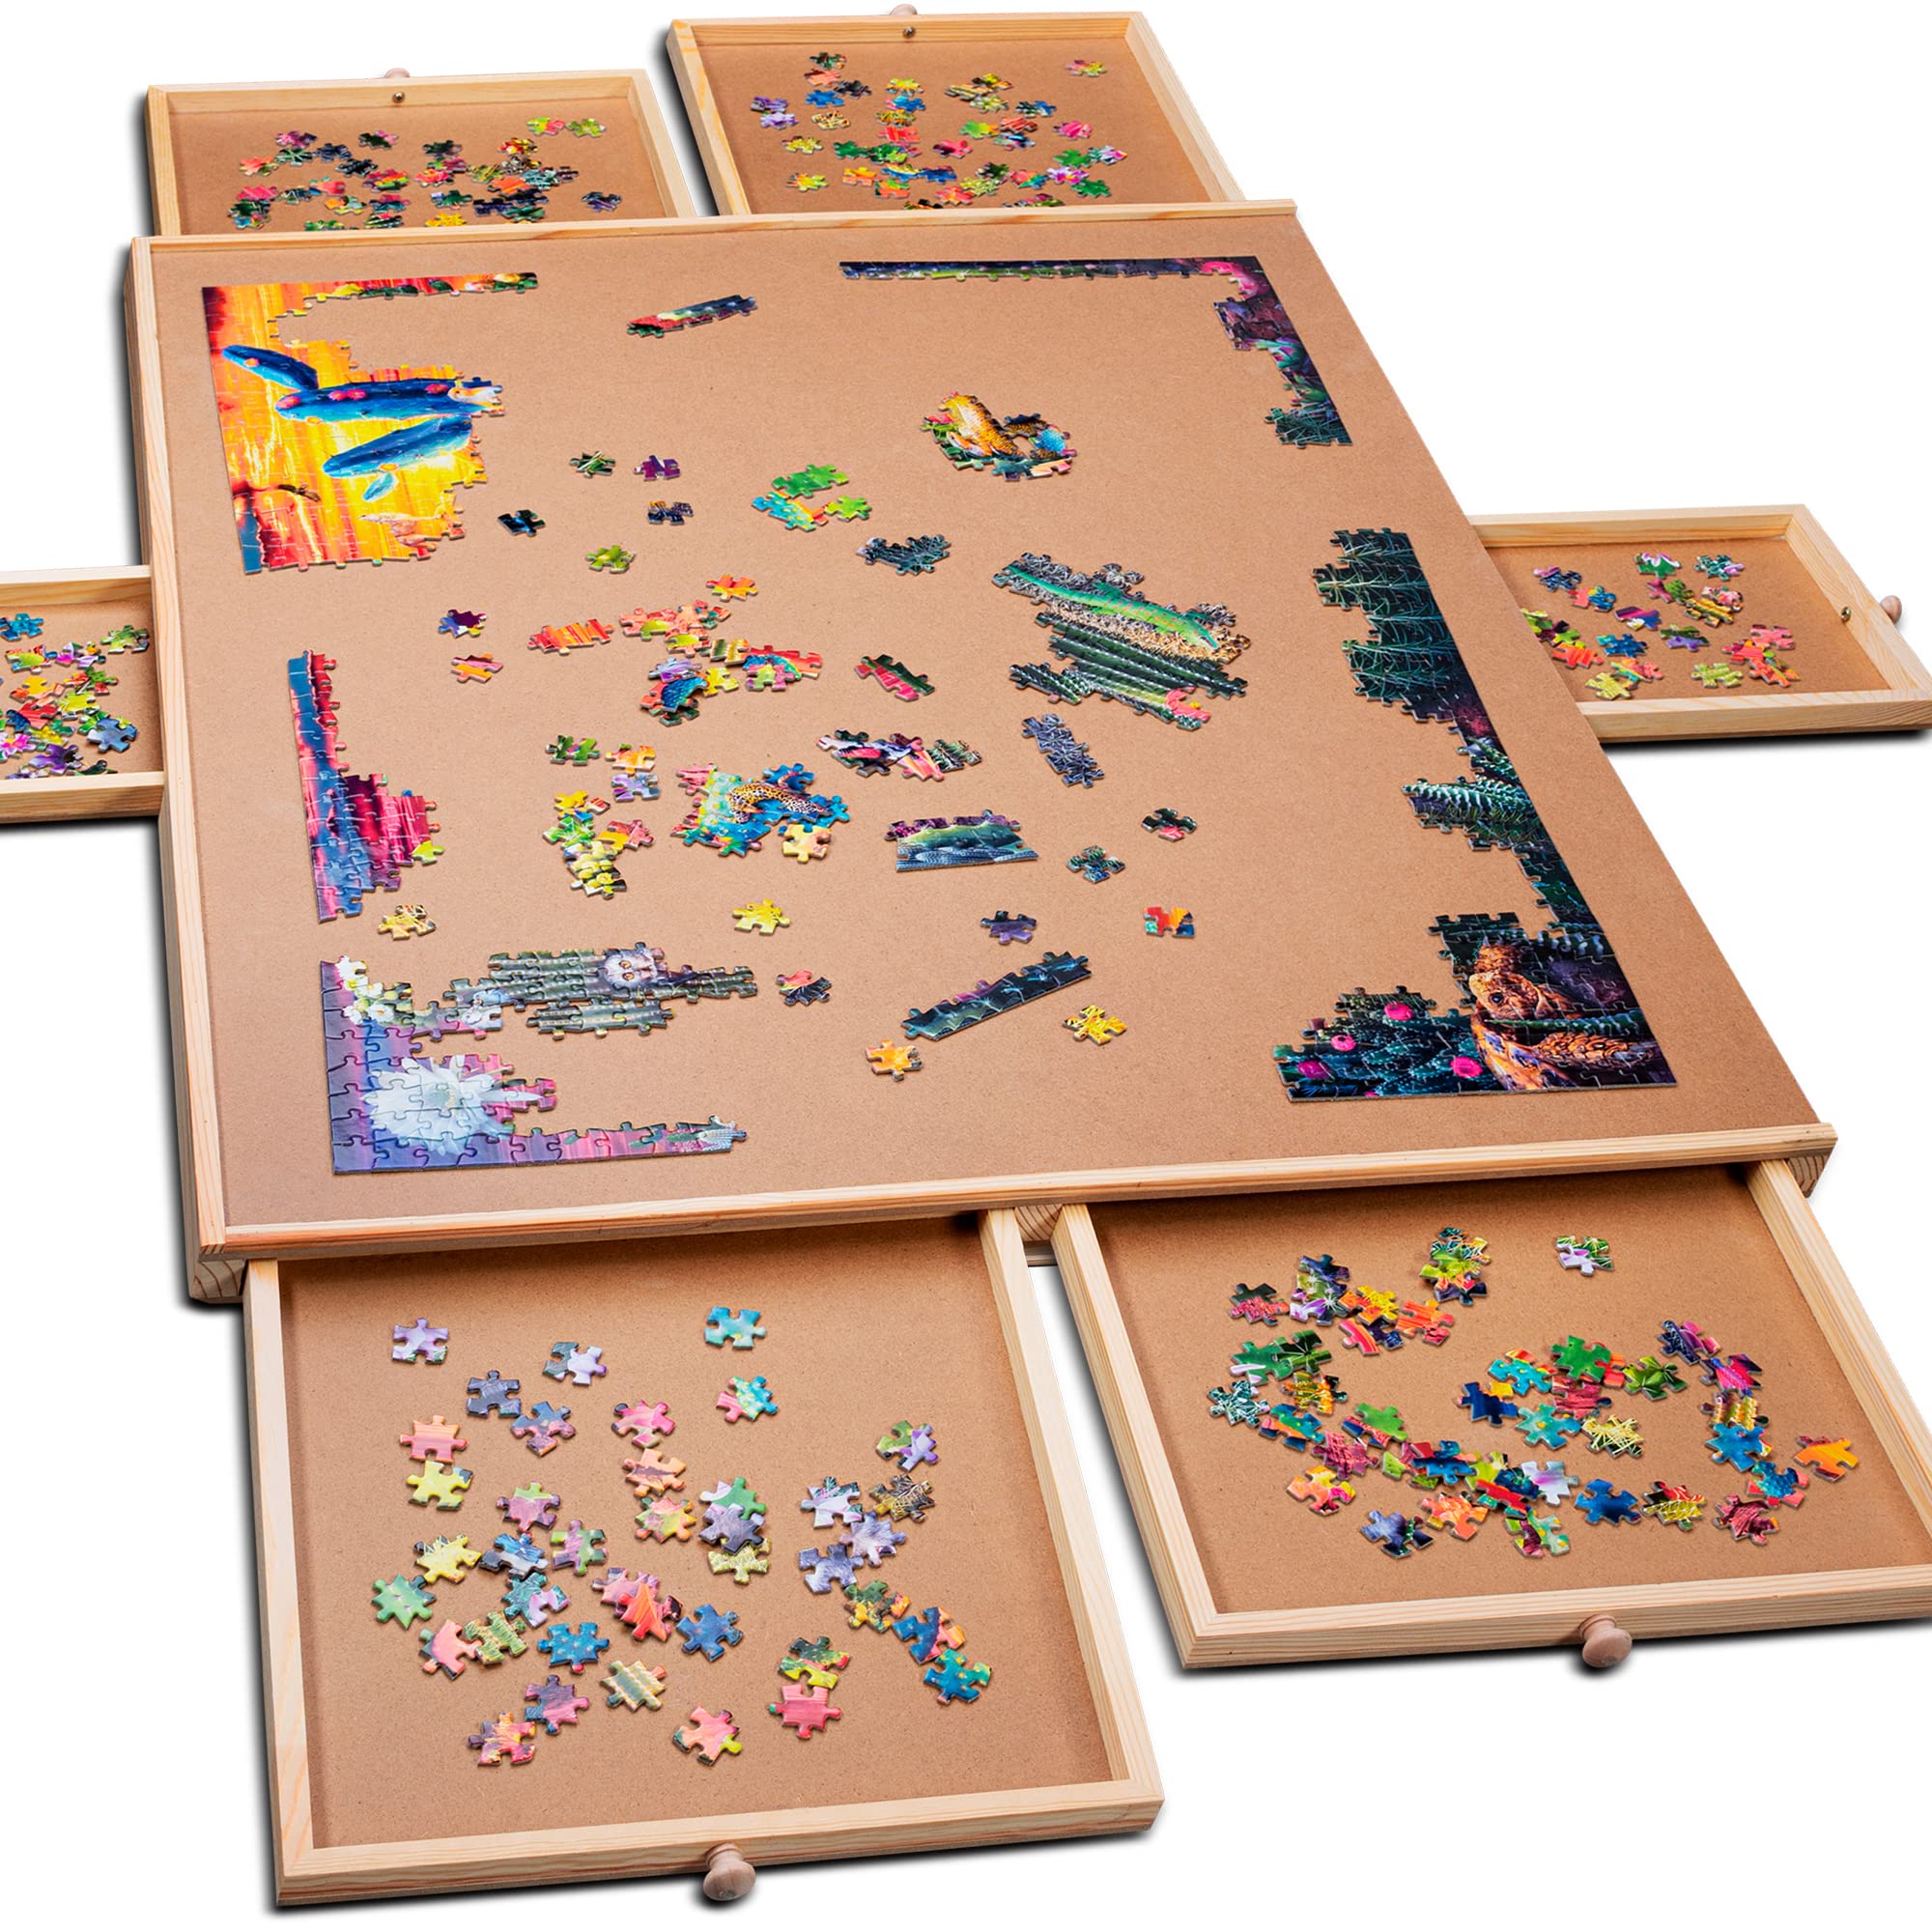 PLAYVIBE 1500 块木制拼图桌 - 6 个抽屉，拼图板 | 27 X 35 便携式拼图板 - 便携式拼图桌 |适合成人和儿童